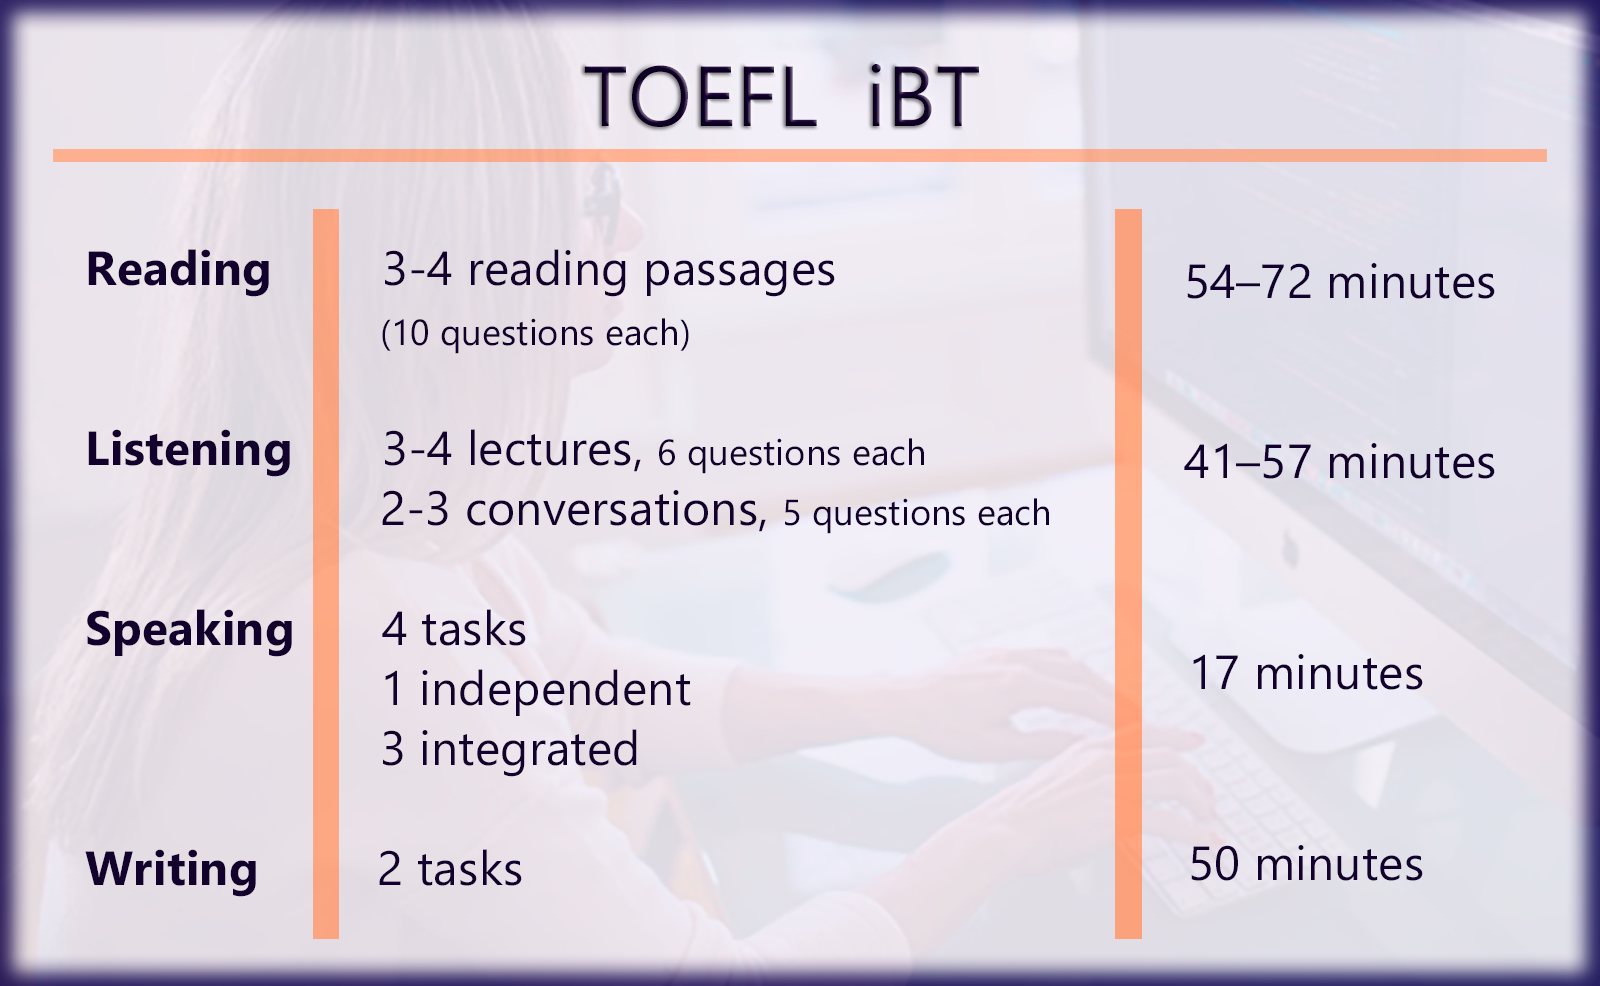 toefl ibt practice test free reading